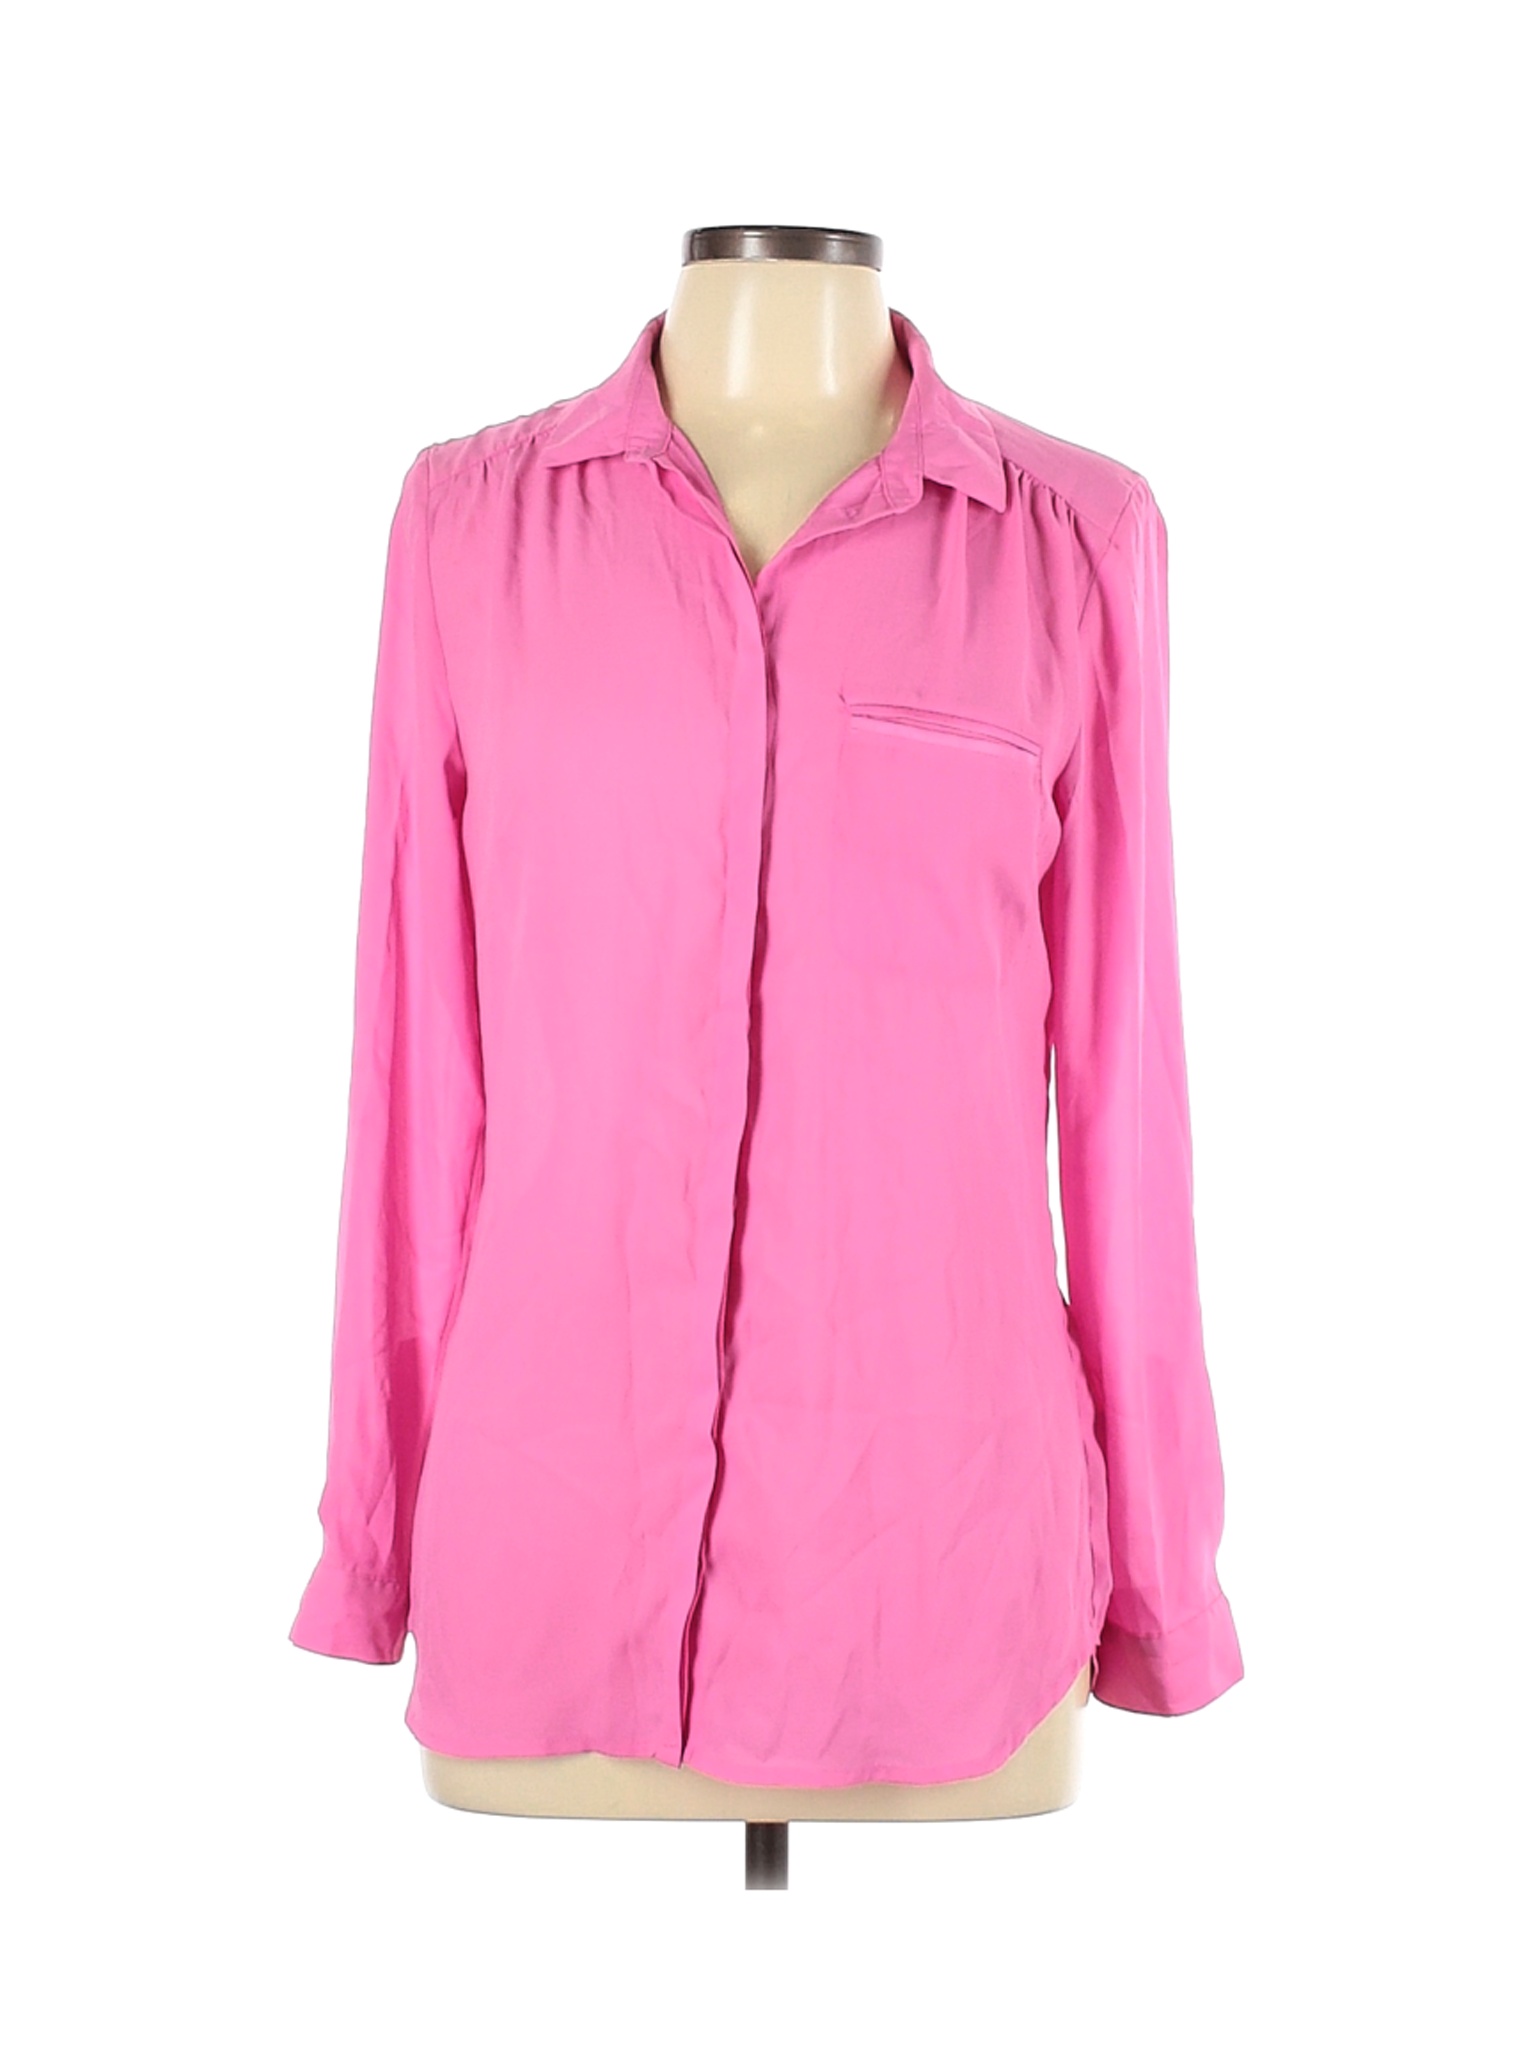 H&M Women Pink Long Sleeve Blouse 10 | eBay